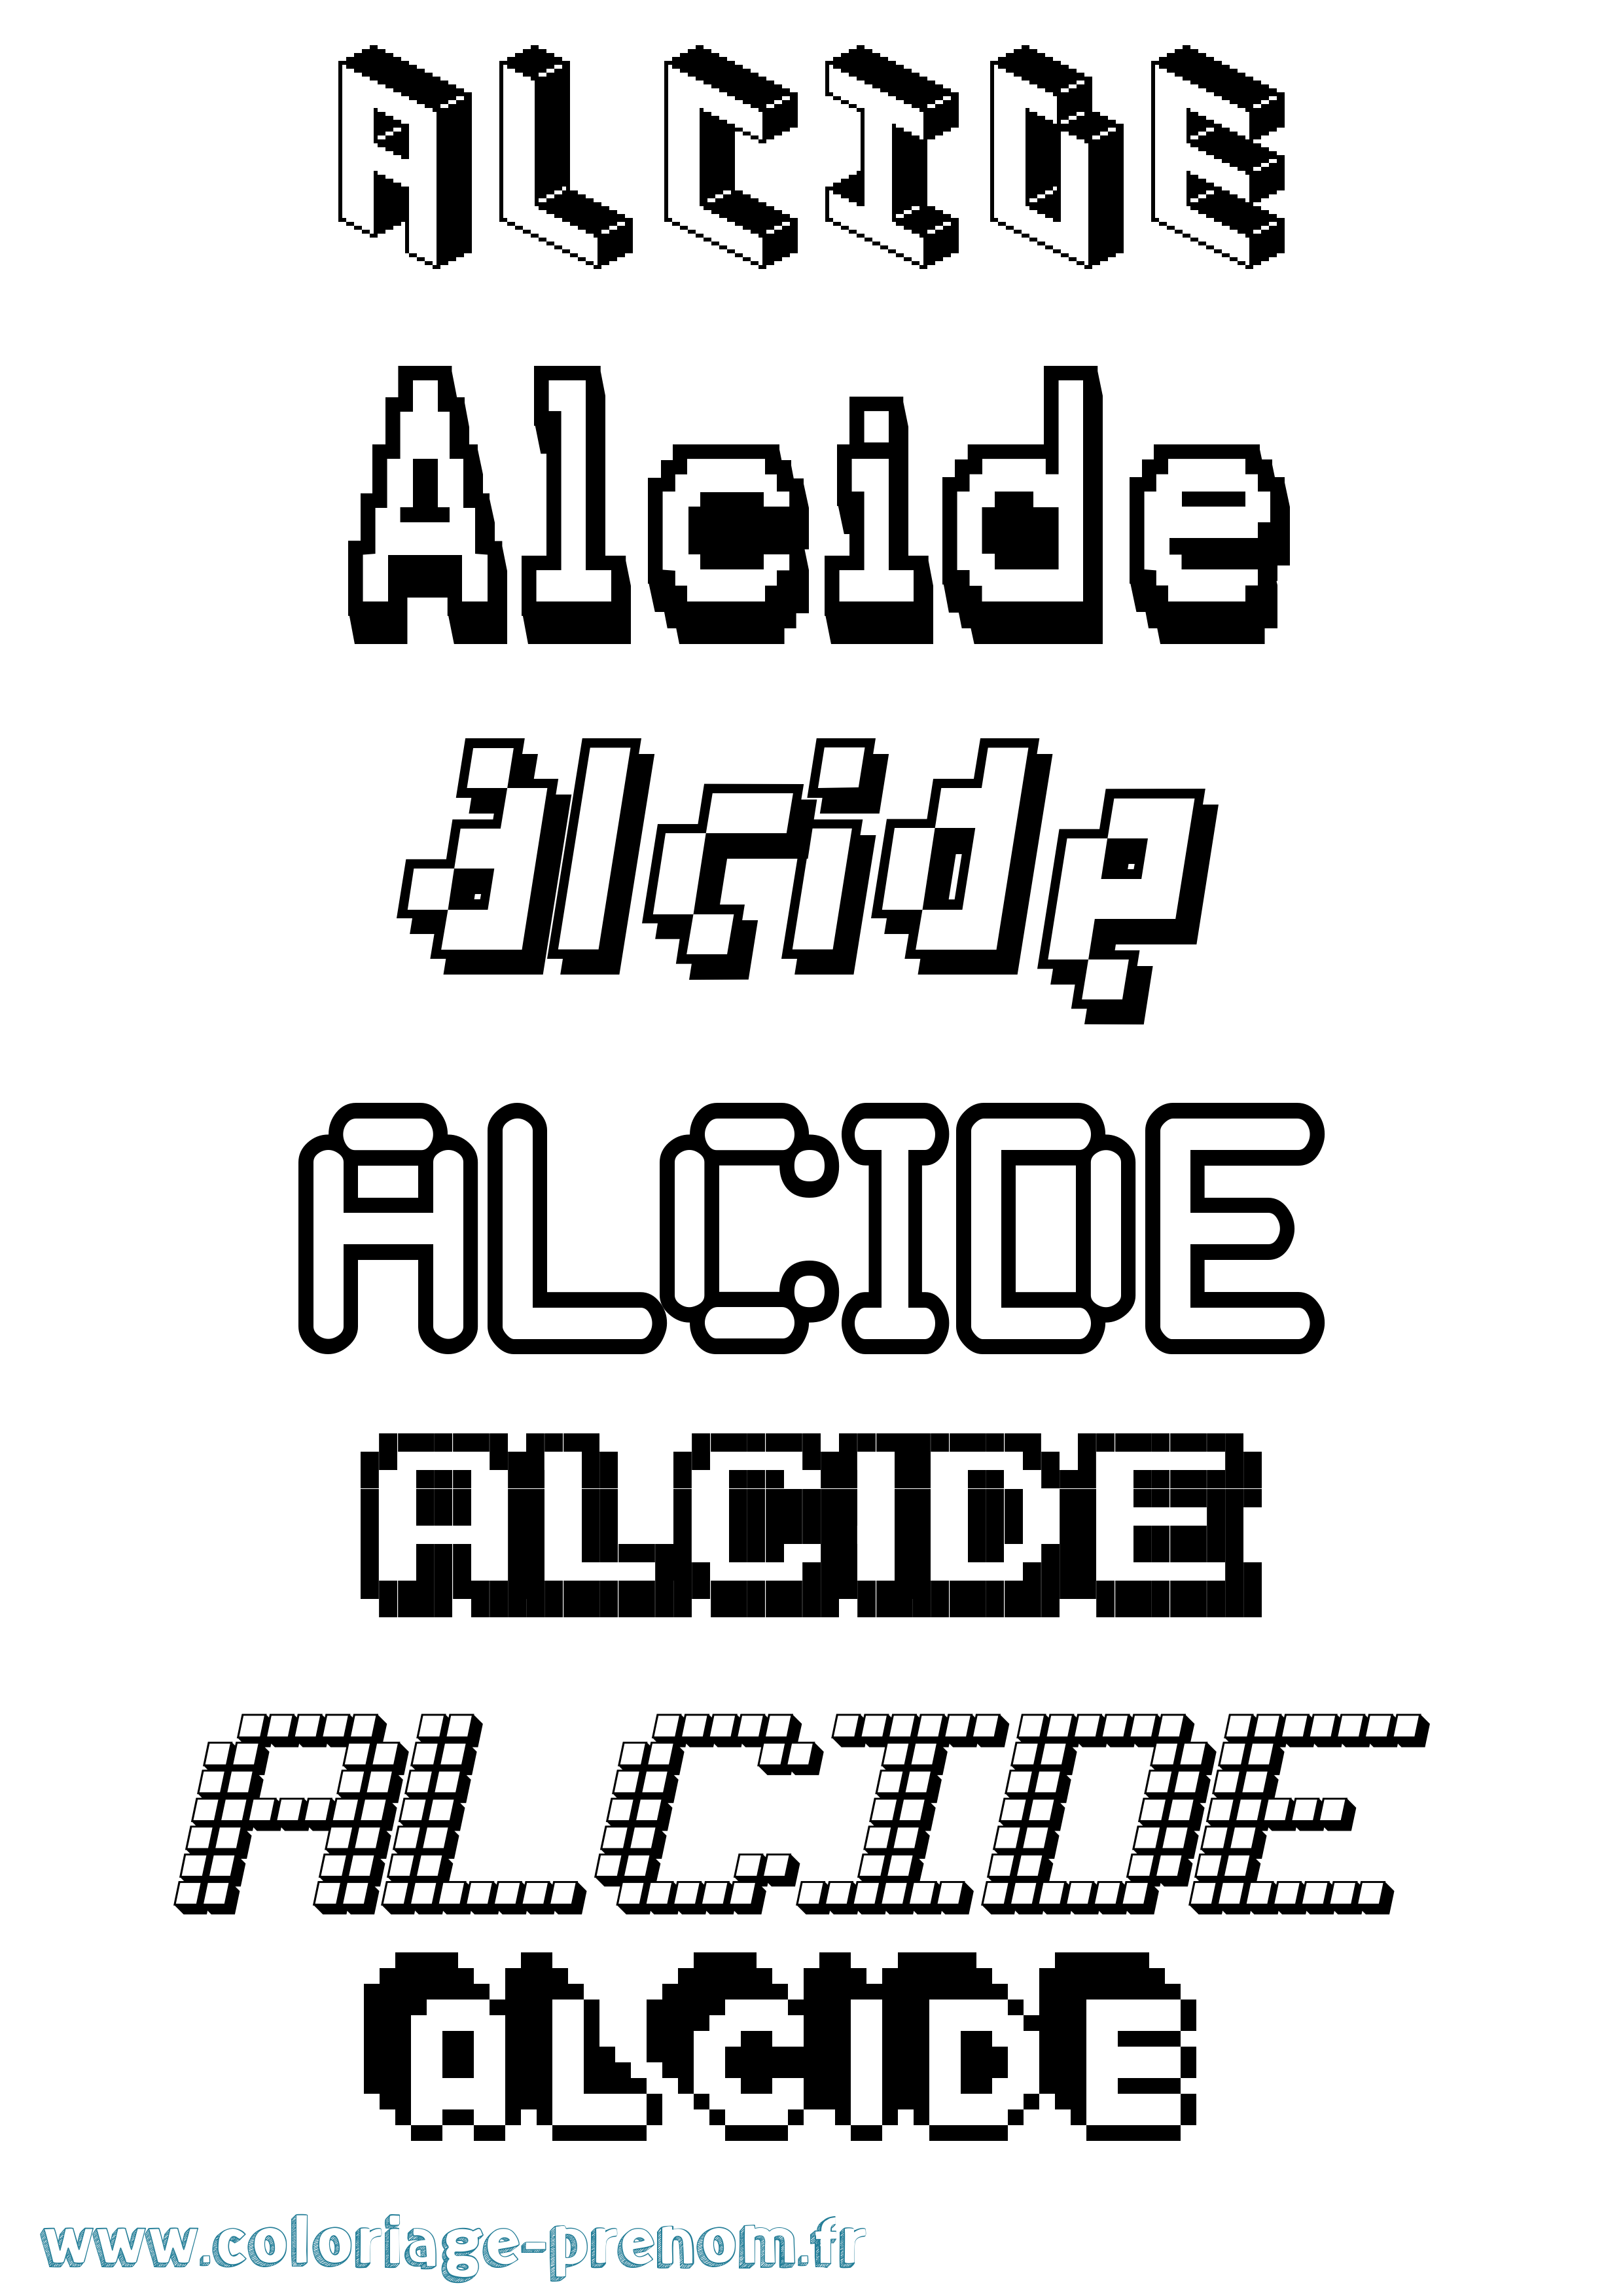 Coloriage prénom Alcide Pixel